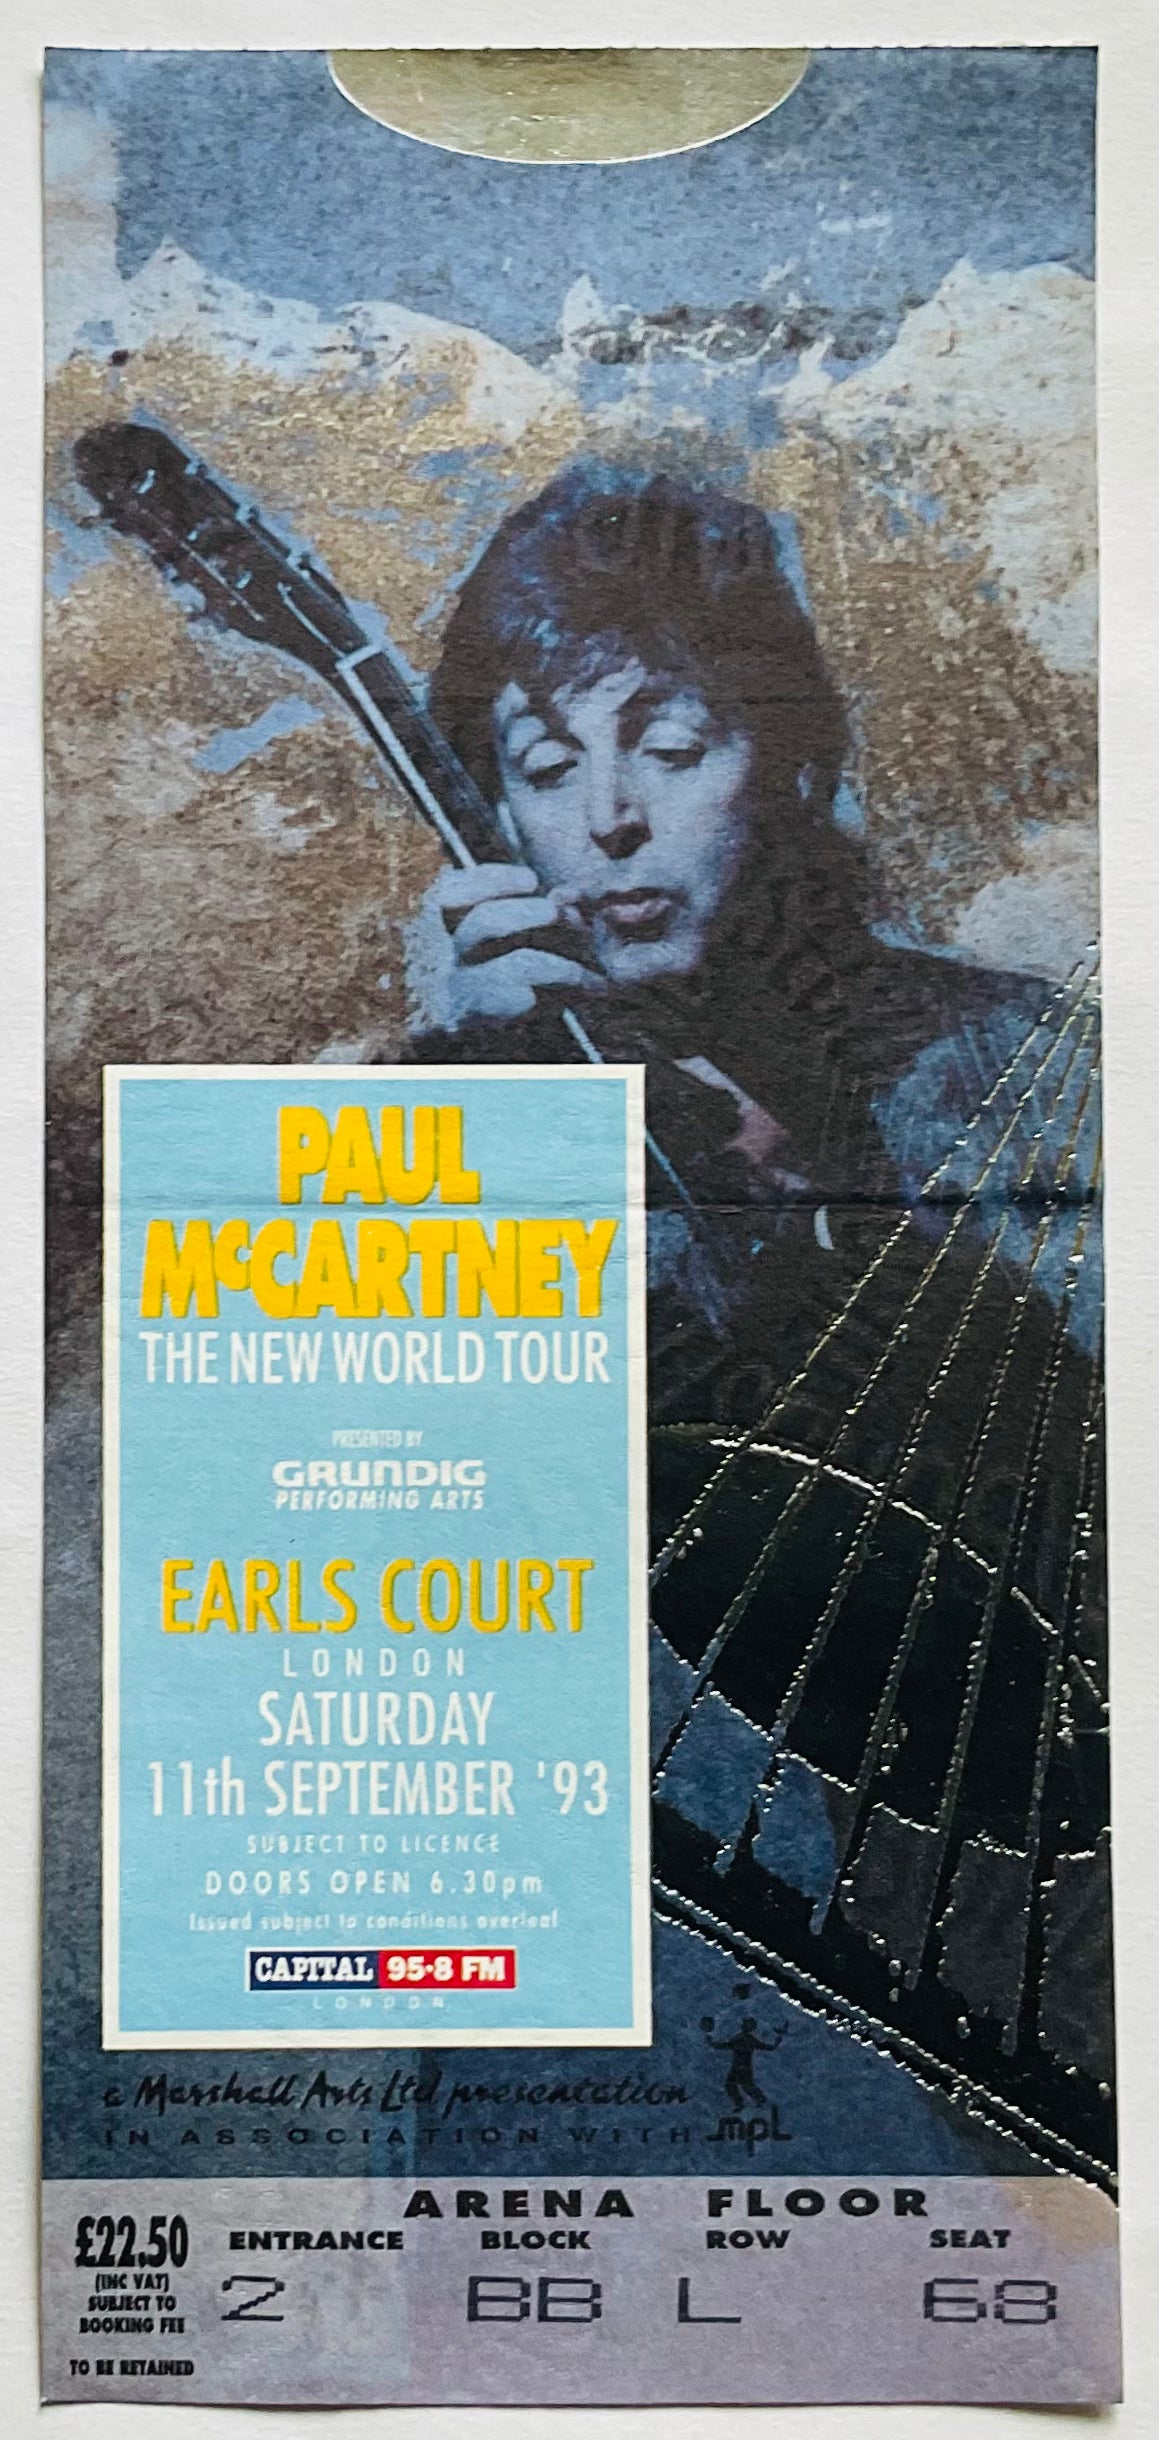 Beatles Paul McCartney Original Used Concert Ticket Earls Court London 11 Sept 1993